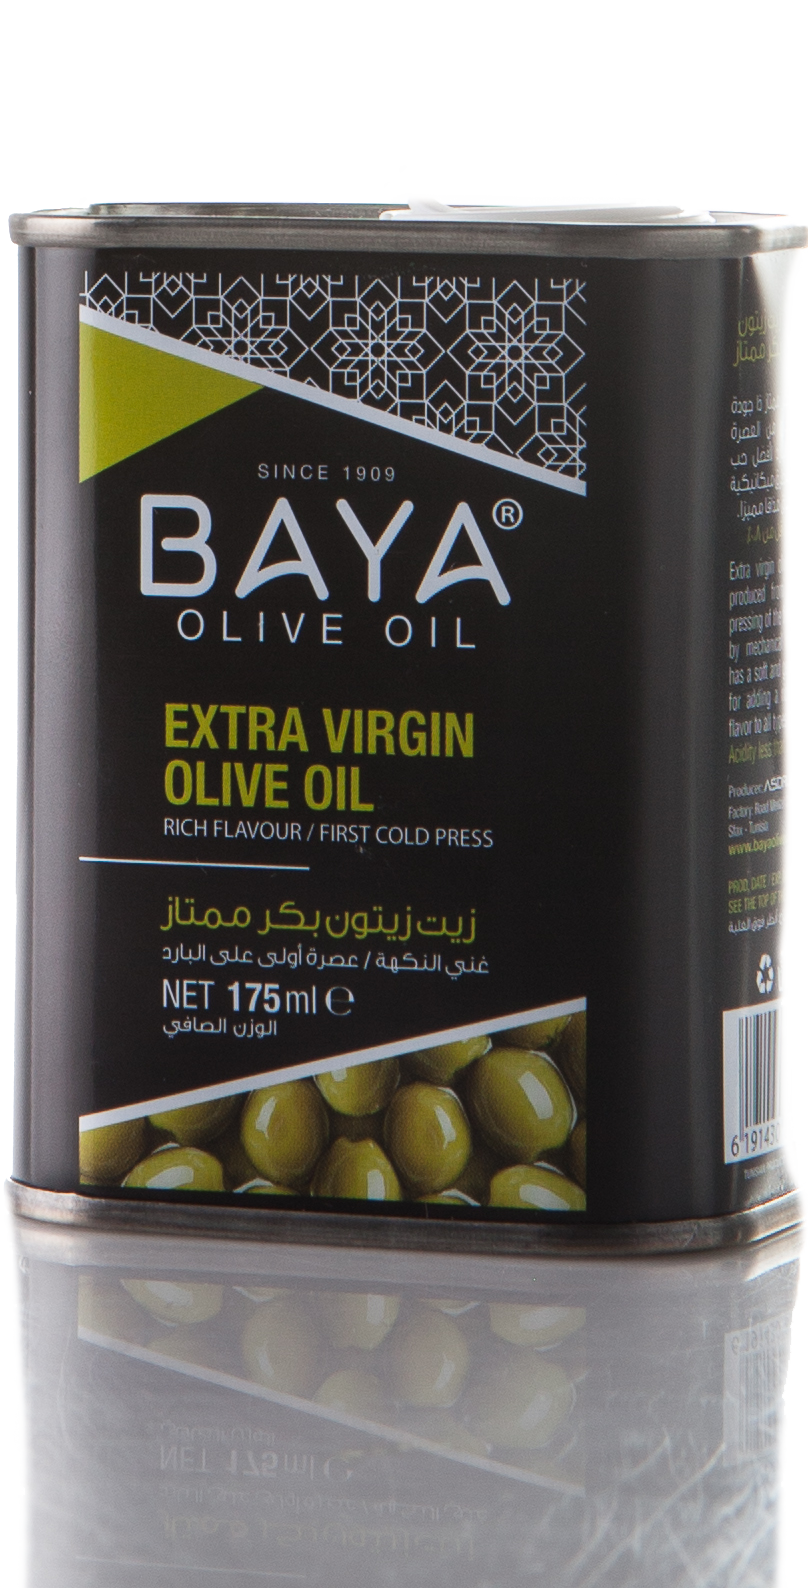 Оливковое масло baya